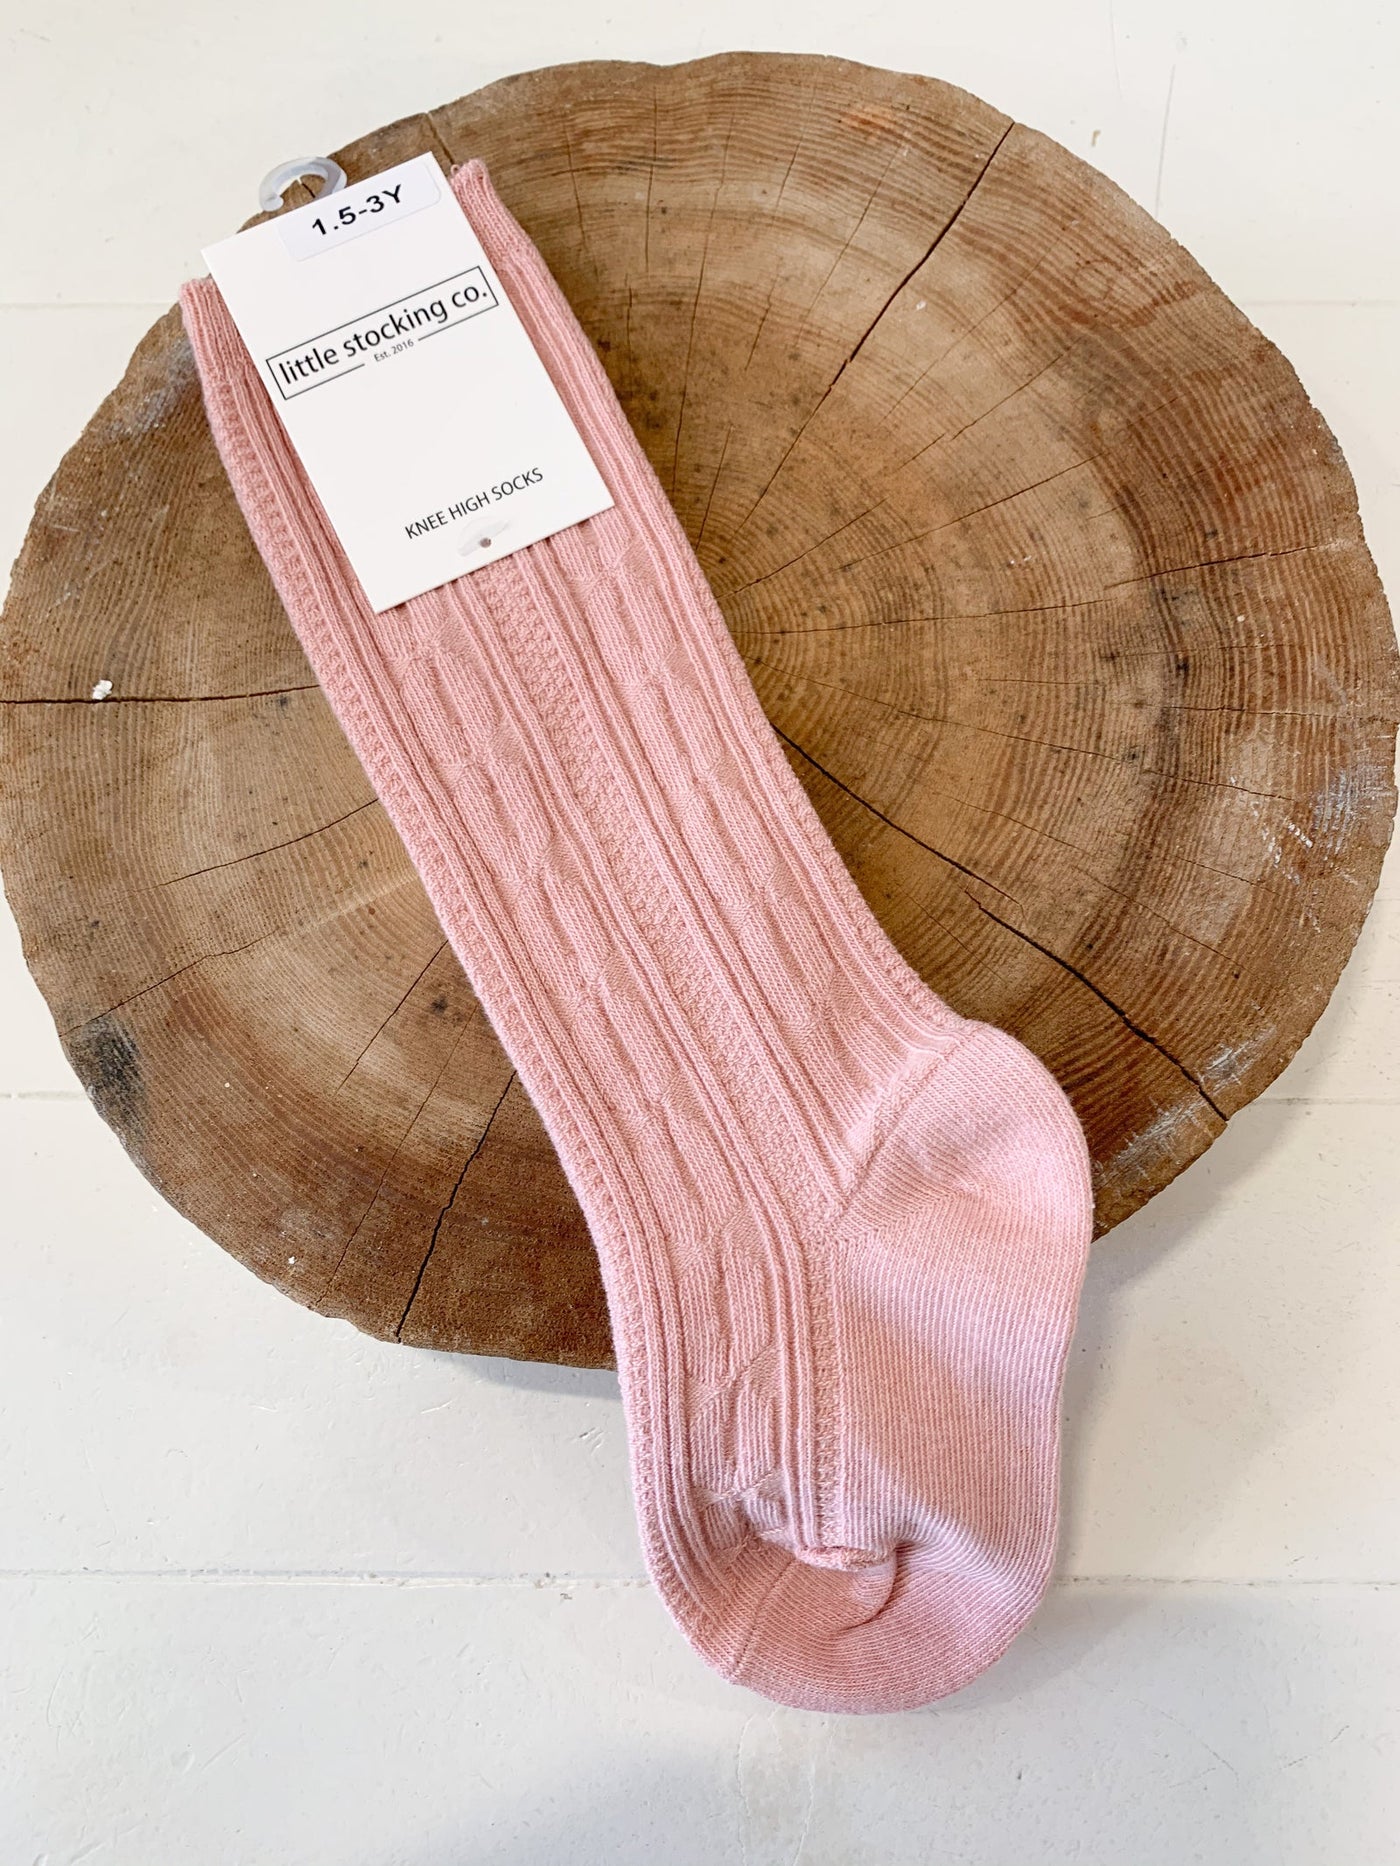 Cable Knit Knee High Socks - Blush